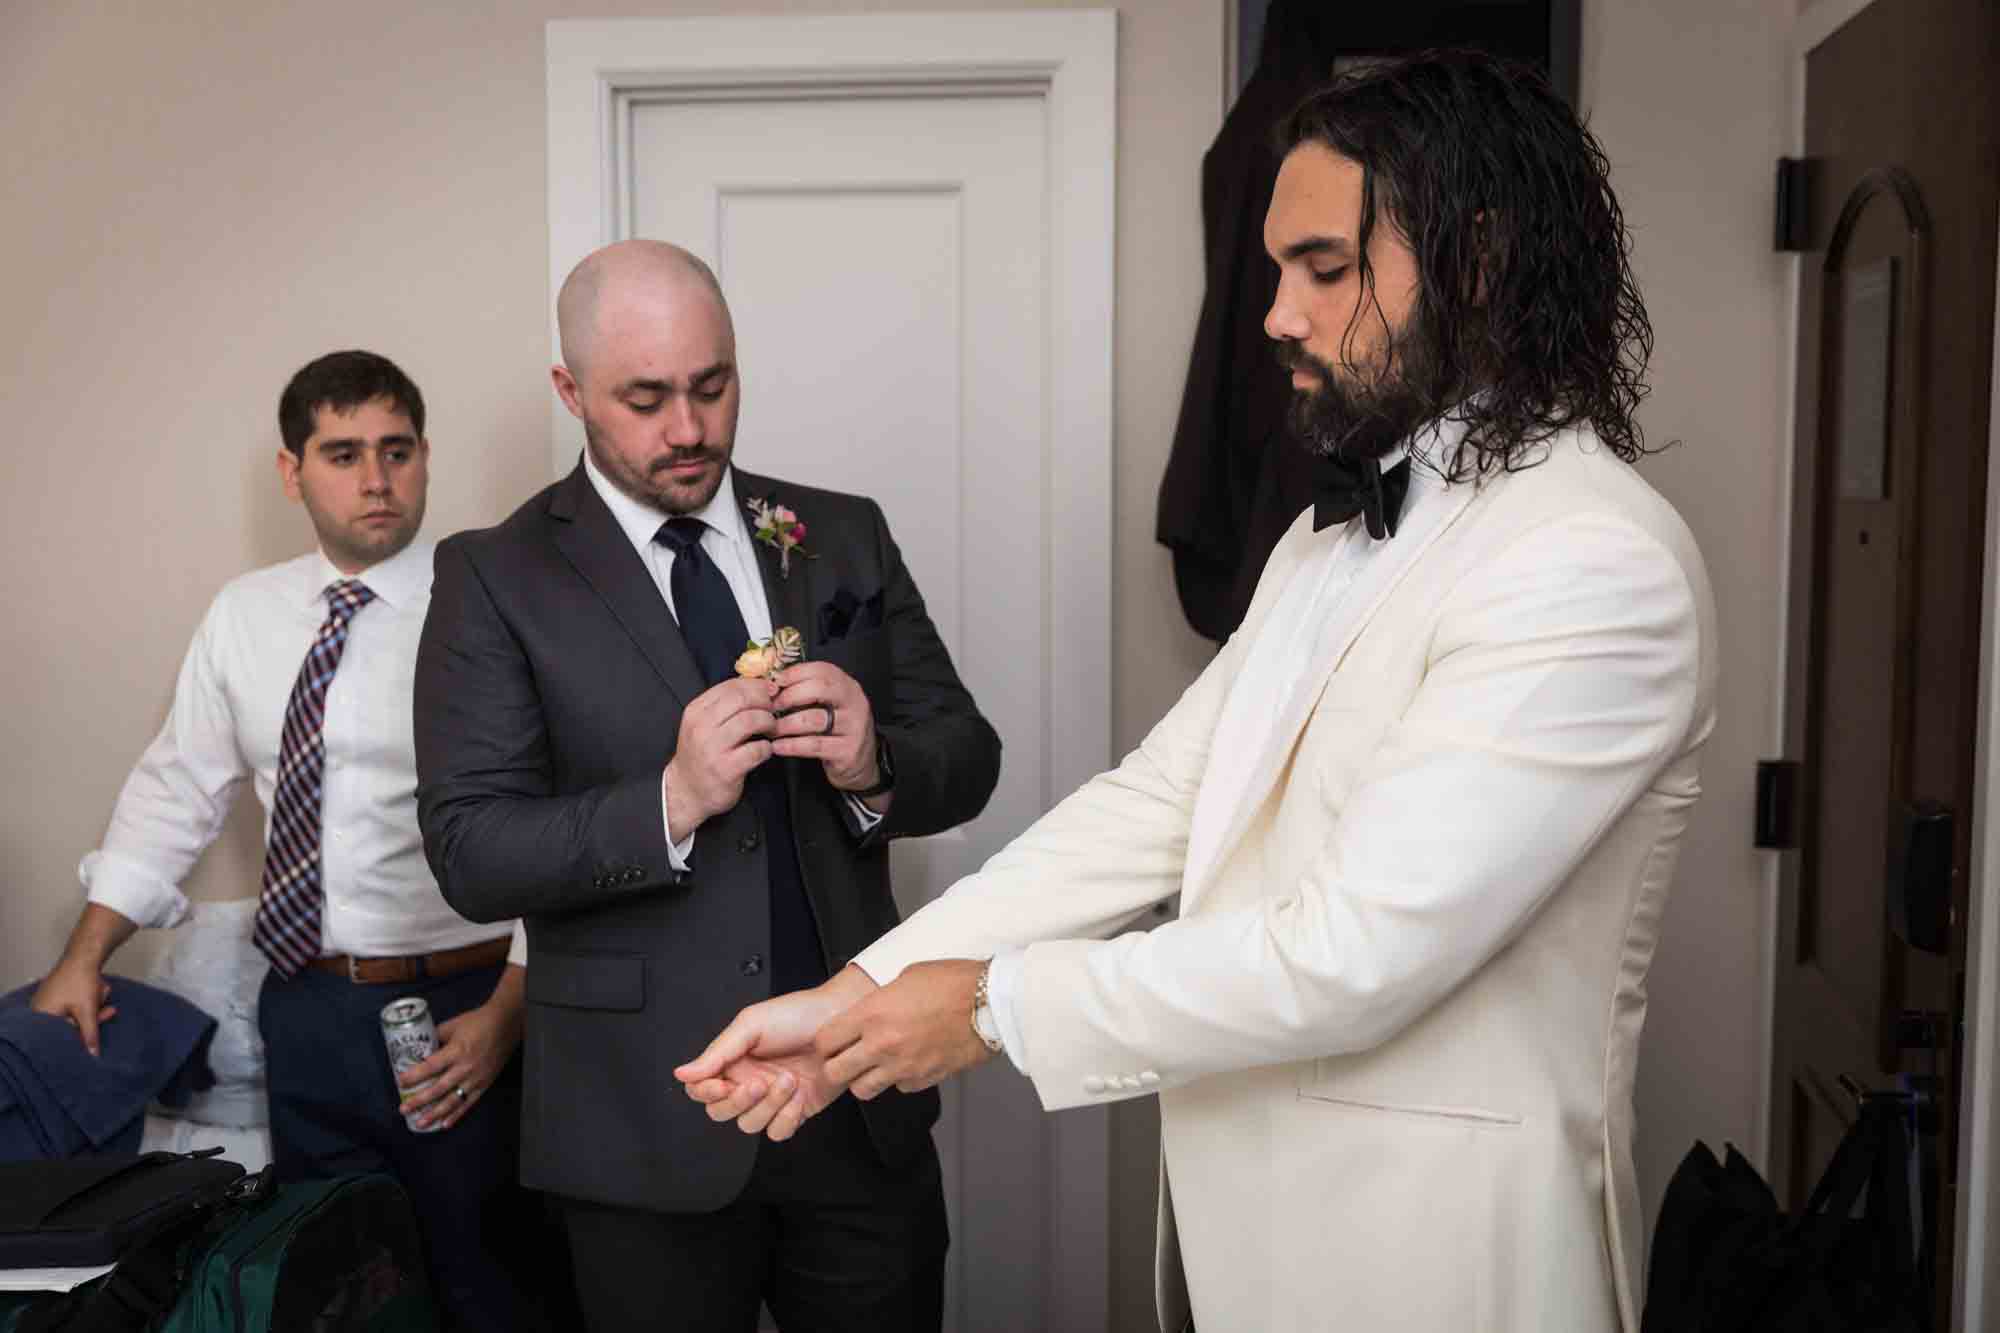 Groom pulling on sleeve of white jacket in front of groomsman holding flowers in hotel room